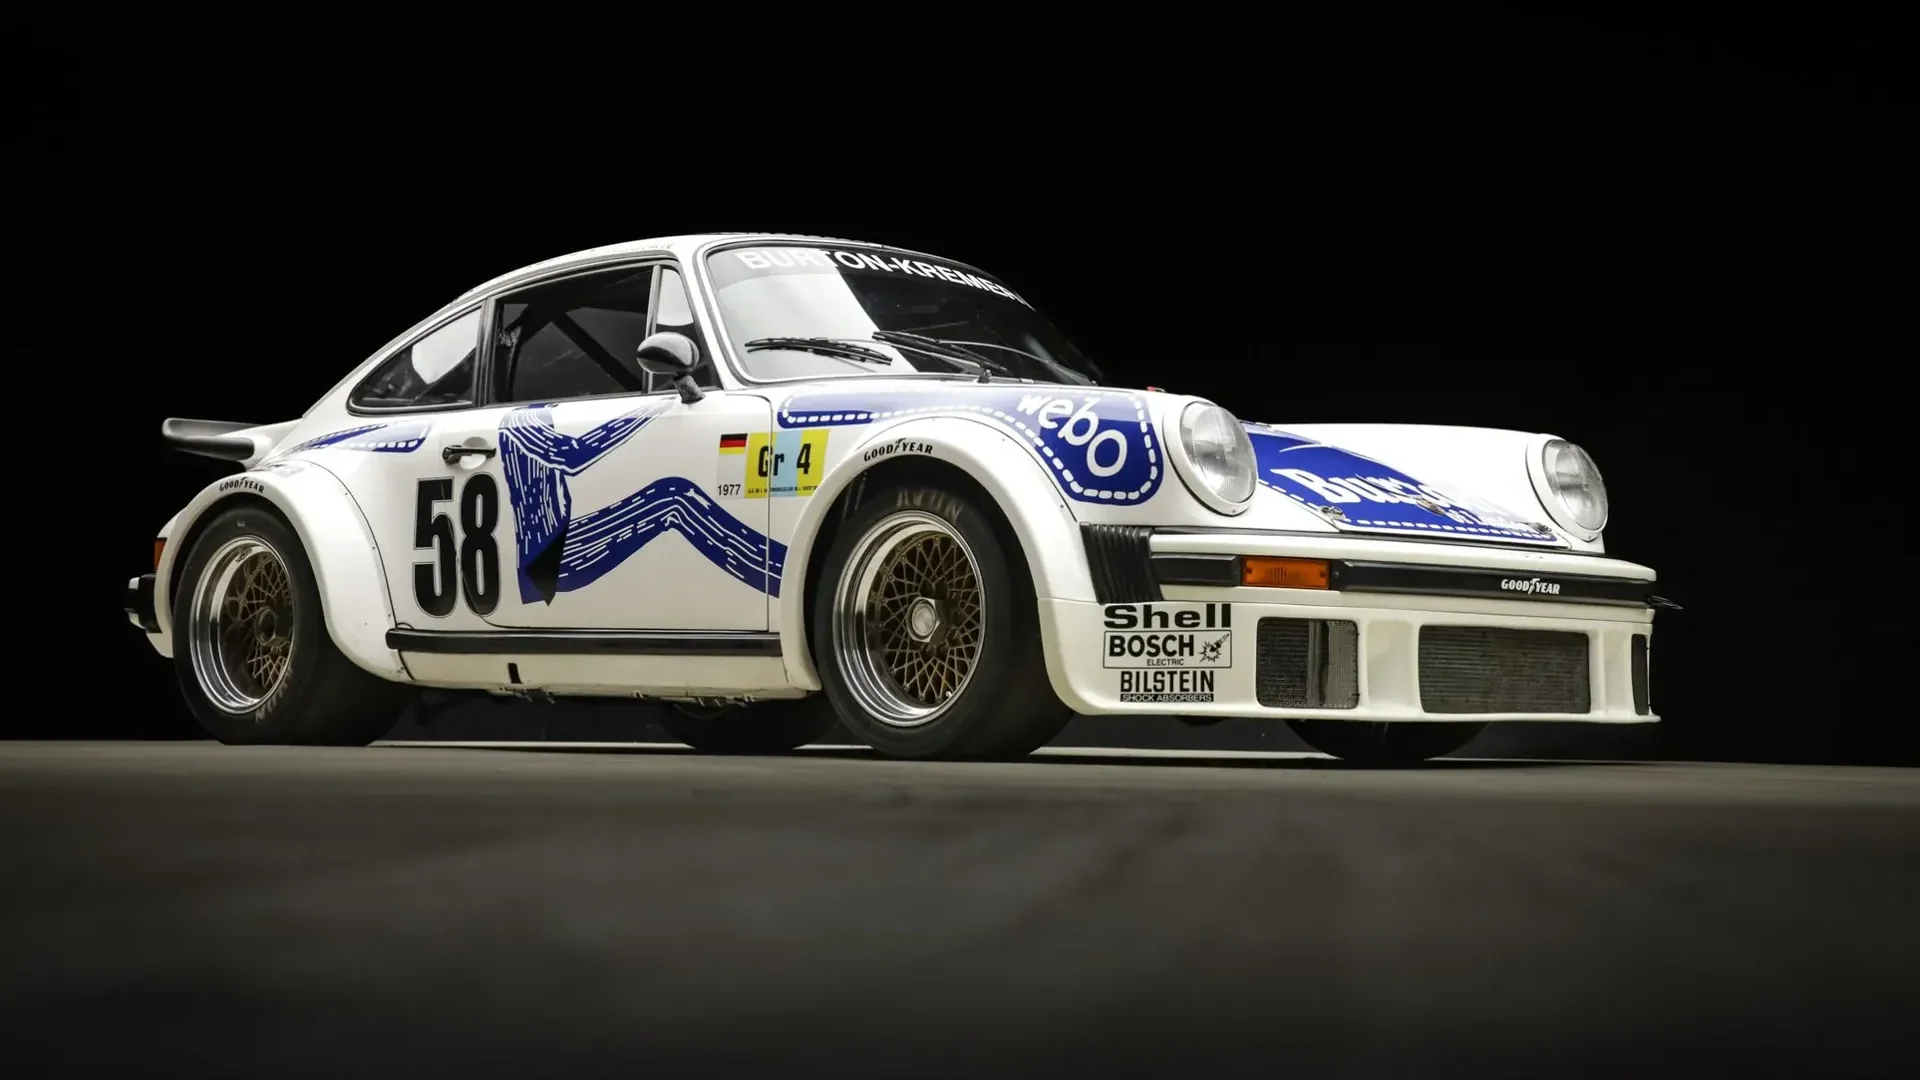 Sale a subasta este Porsche 934, ganador de su clase en Le Mans en 1977